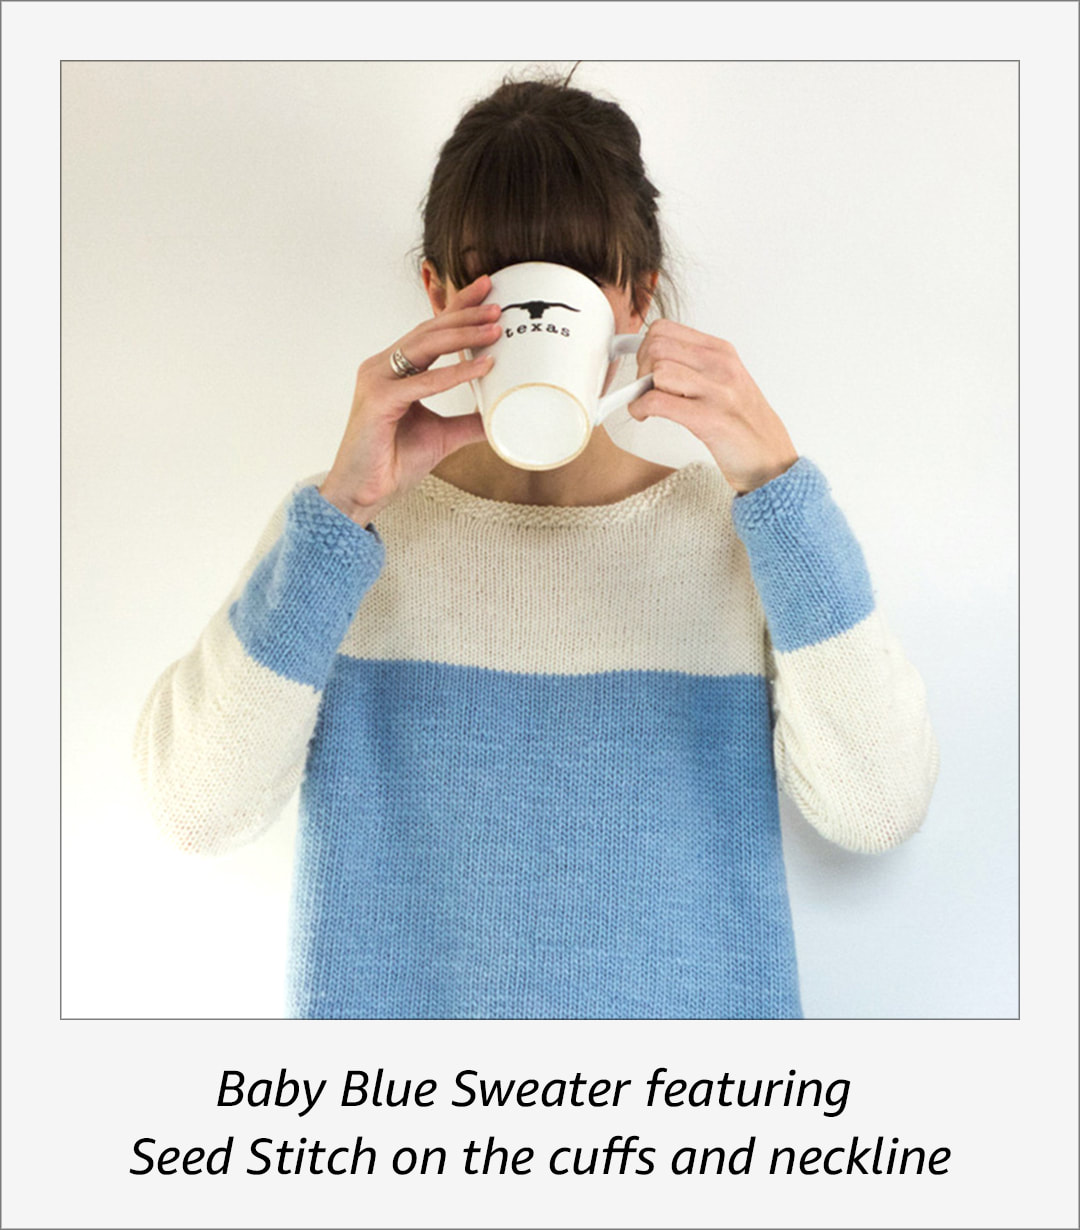 Baby Blue Sweater by Anna Ravenscroft / Anna Alway, www.kikuknits.com